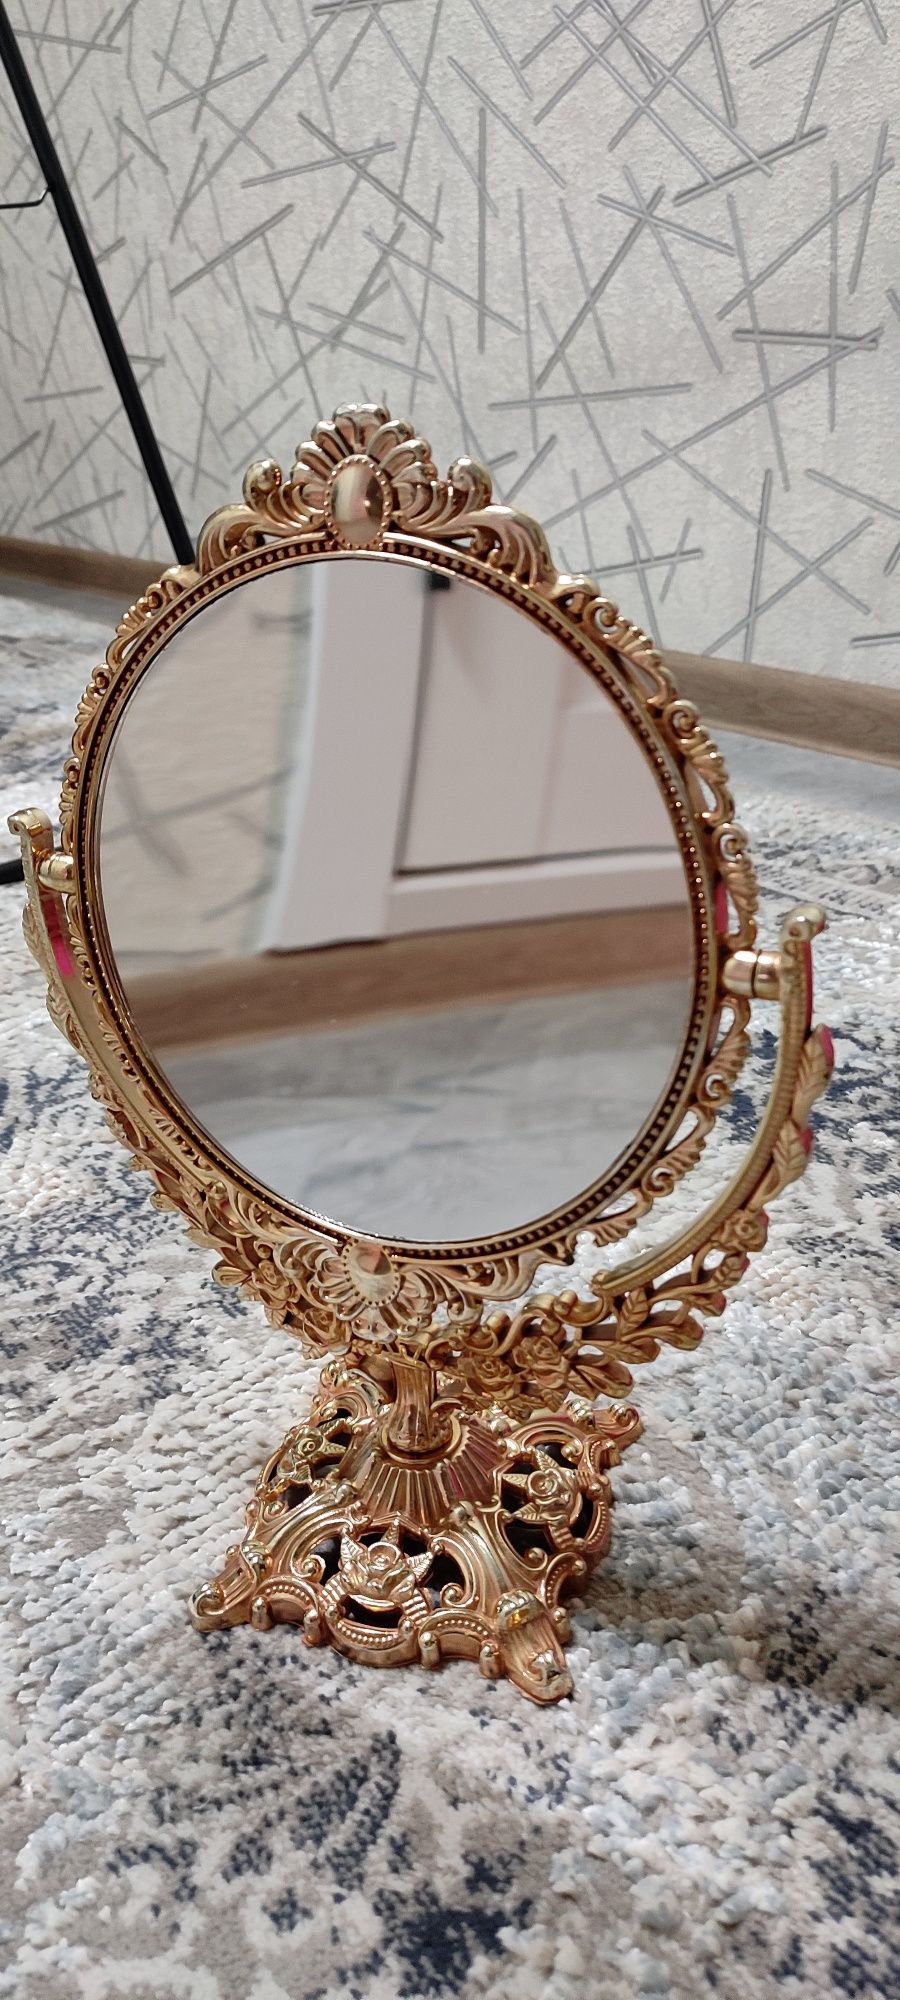 Зеркало для макияжа